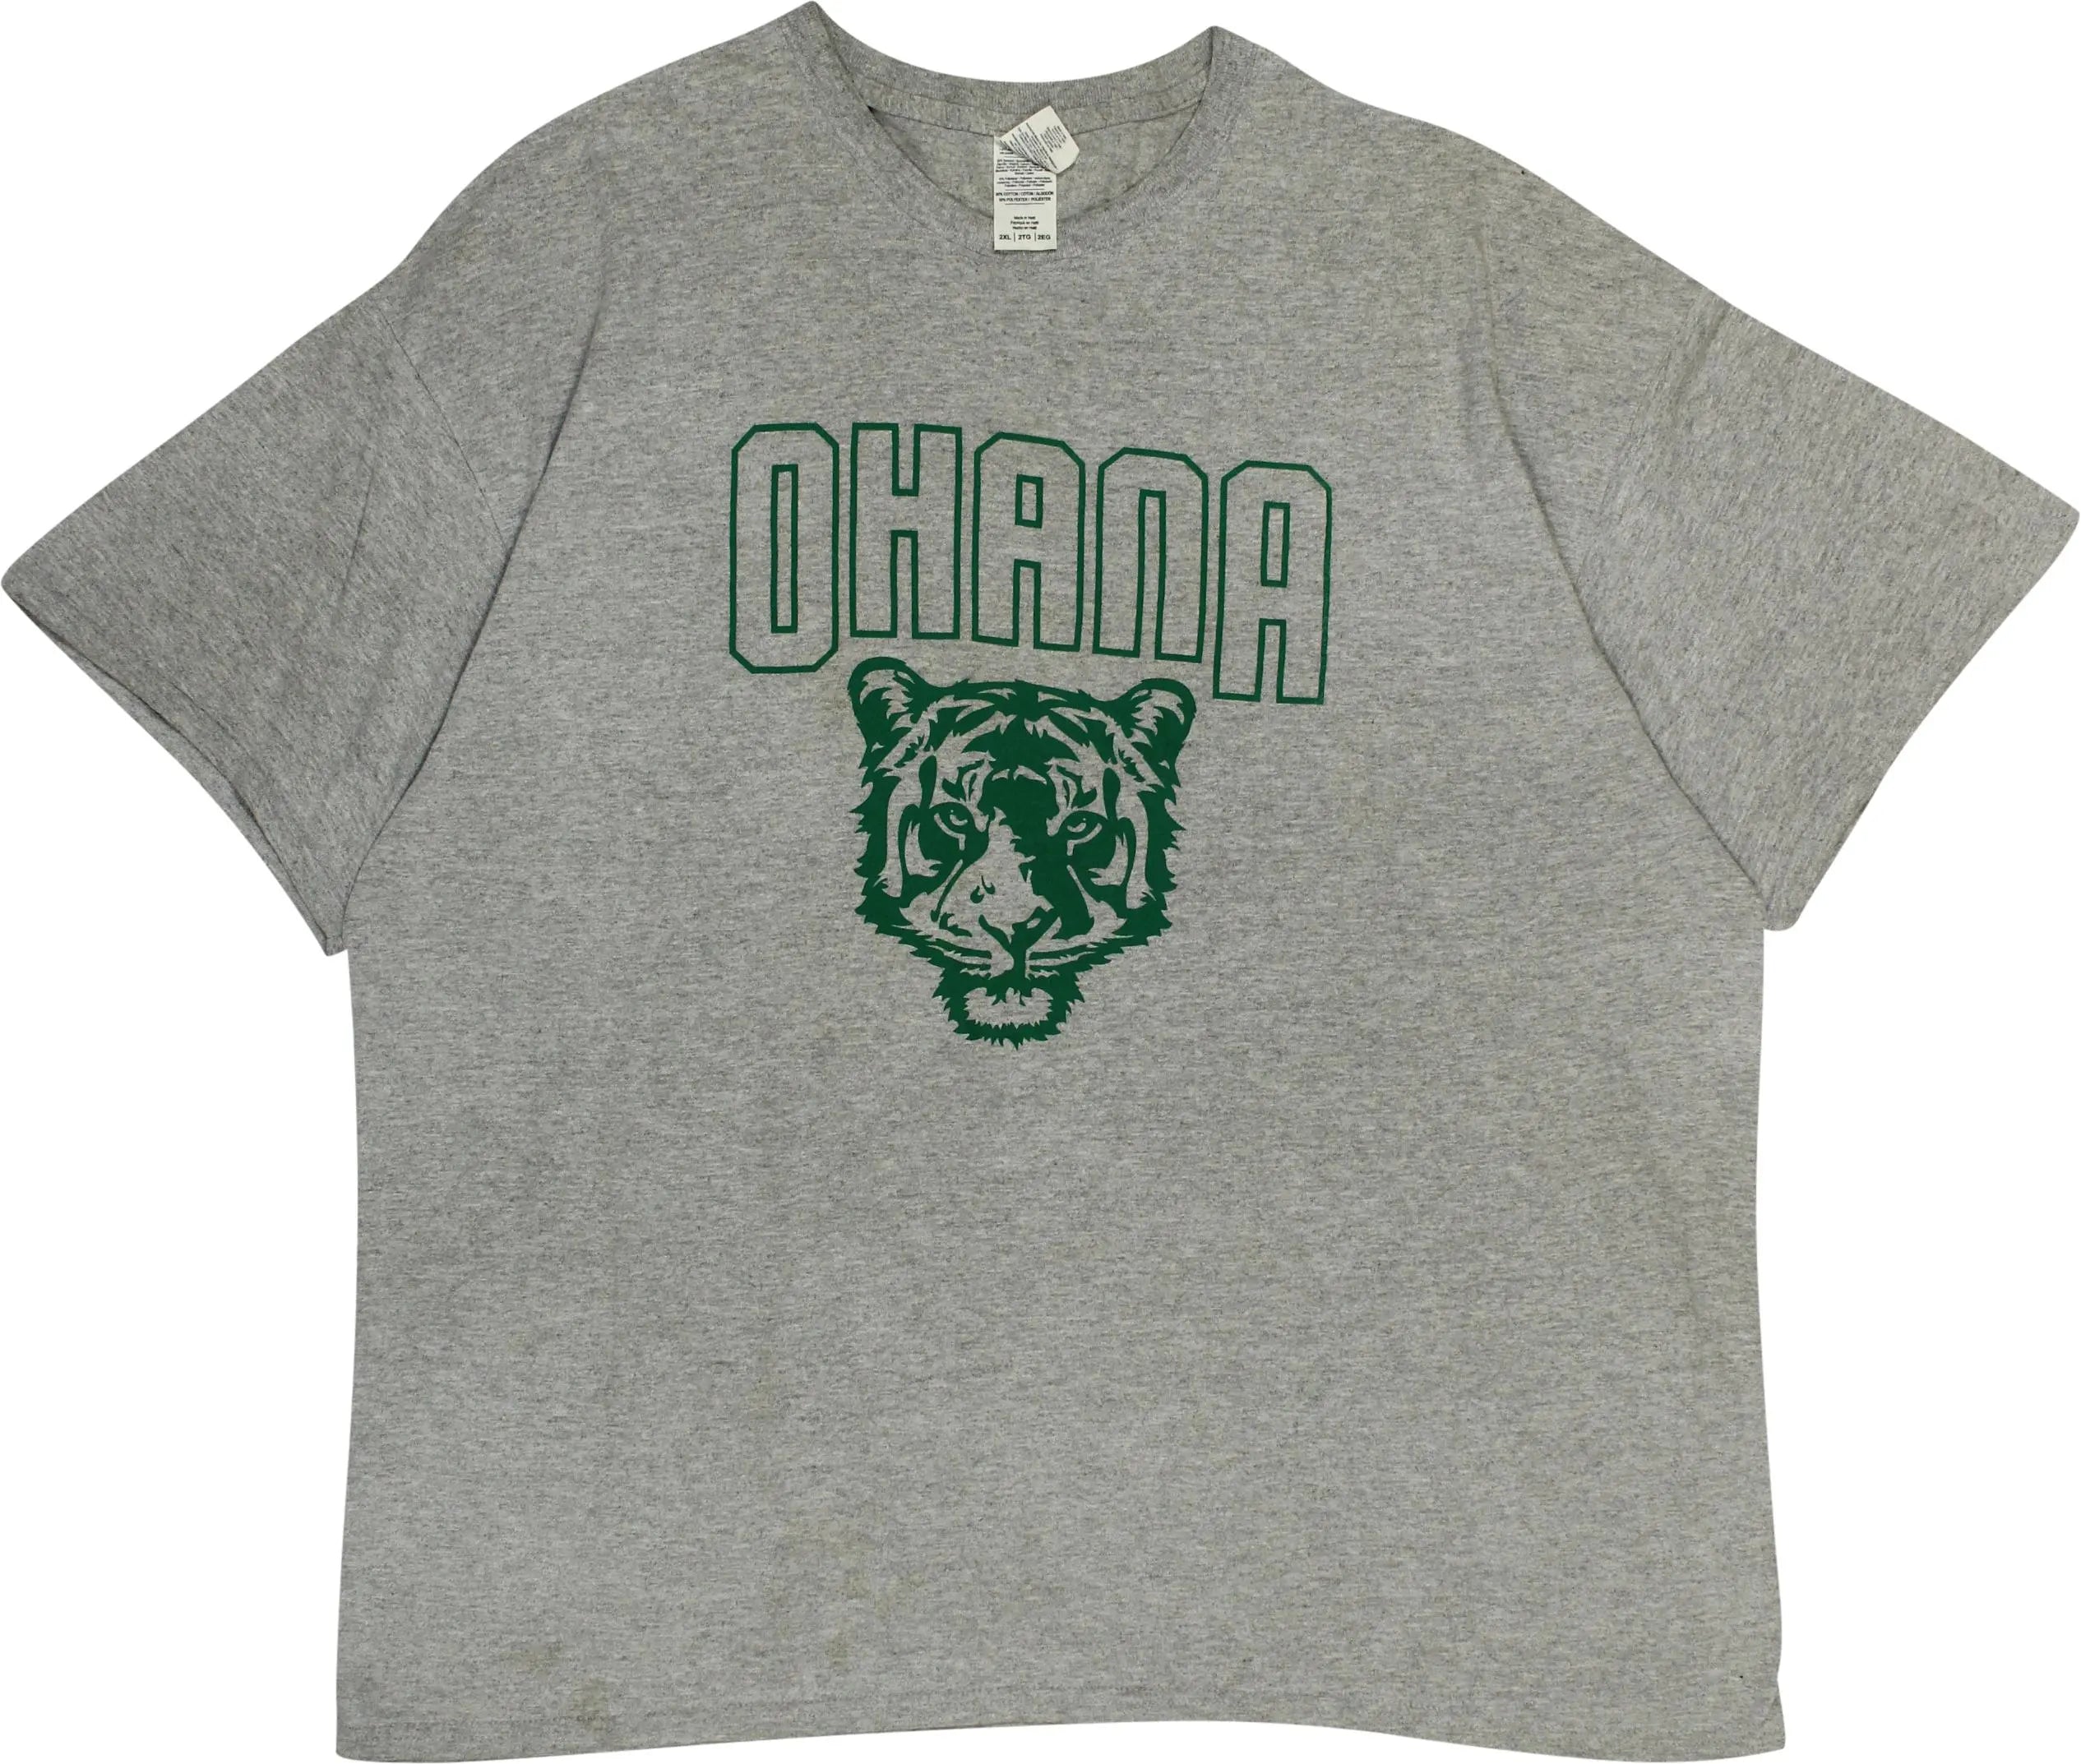 Gildan - Ohana T-Shirt- ThriftTale.com - Vintage and second handclothing